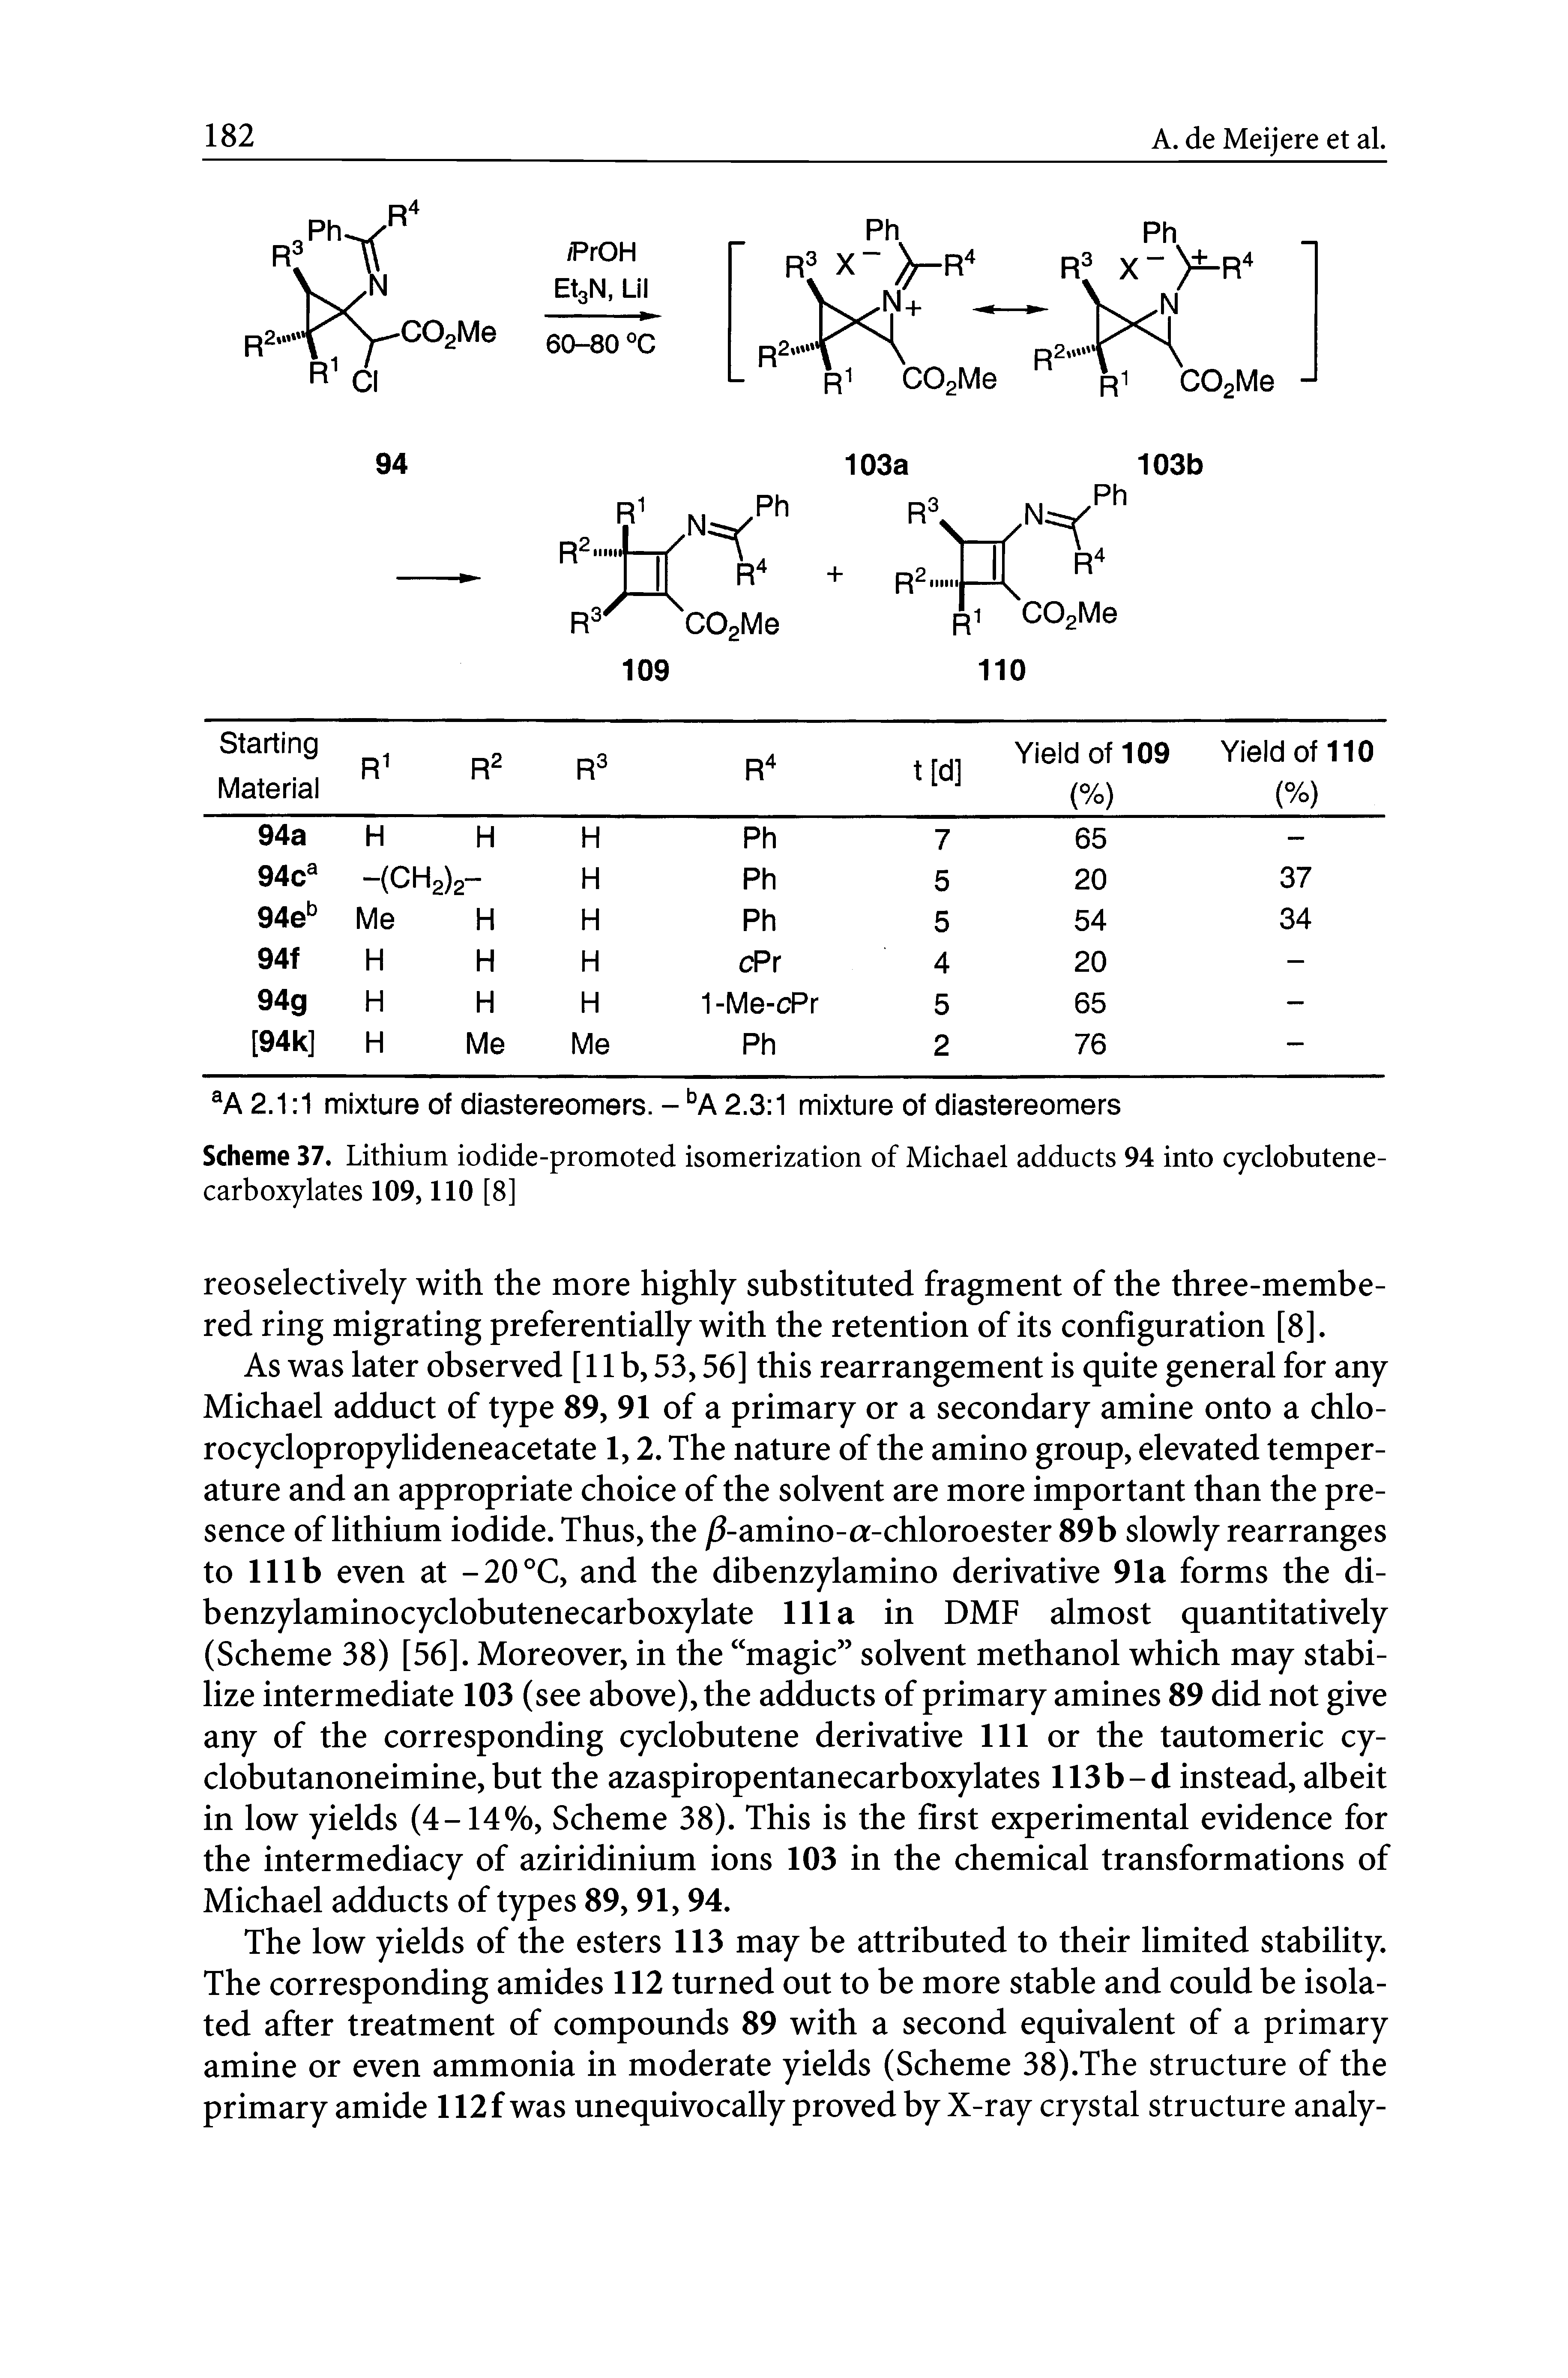 Scheme 37. Lithium iodide-promoted isomerization of Michael adducts 94 into cyclobutene-carboxylates 109,110 [8]...